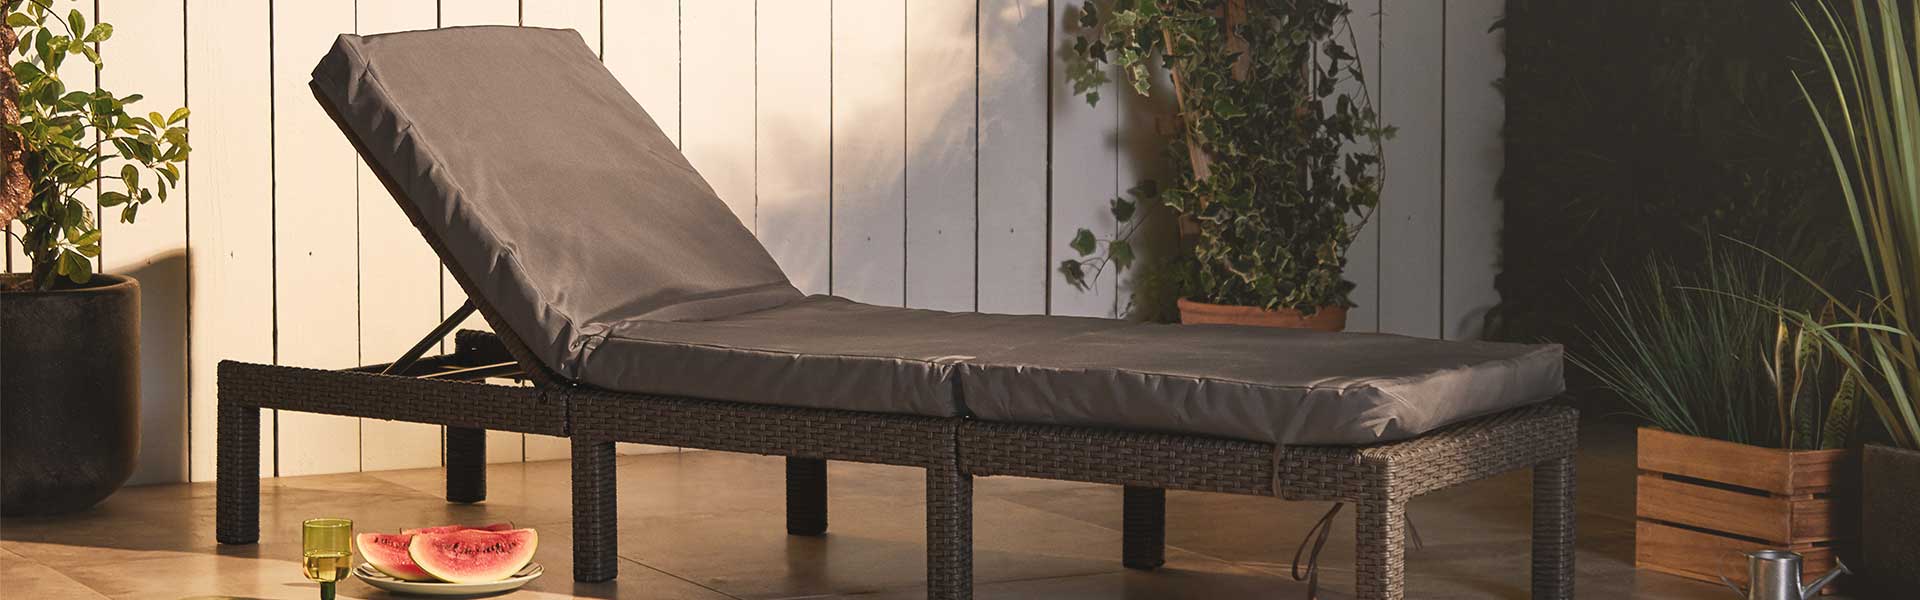 Black rattan sun lounger on the patio - 2021 garden furniture - Goodhomesmagazine.com